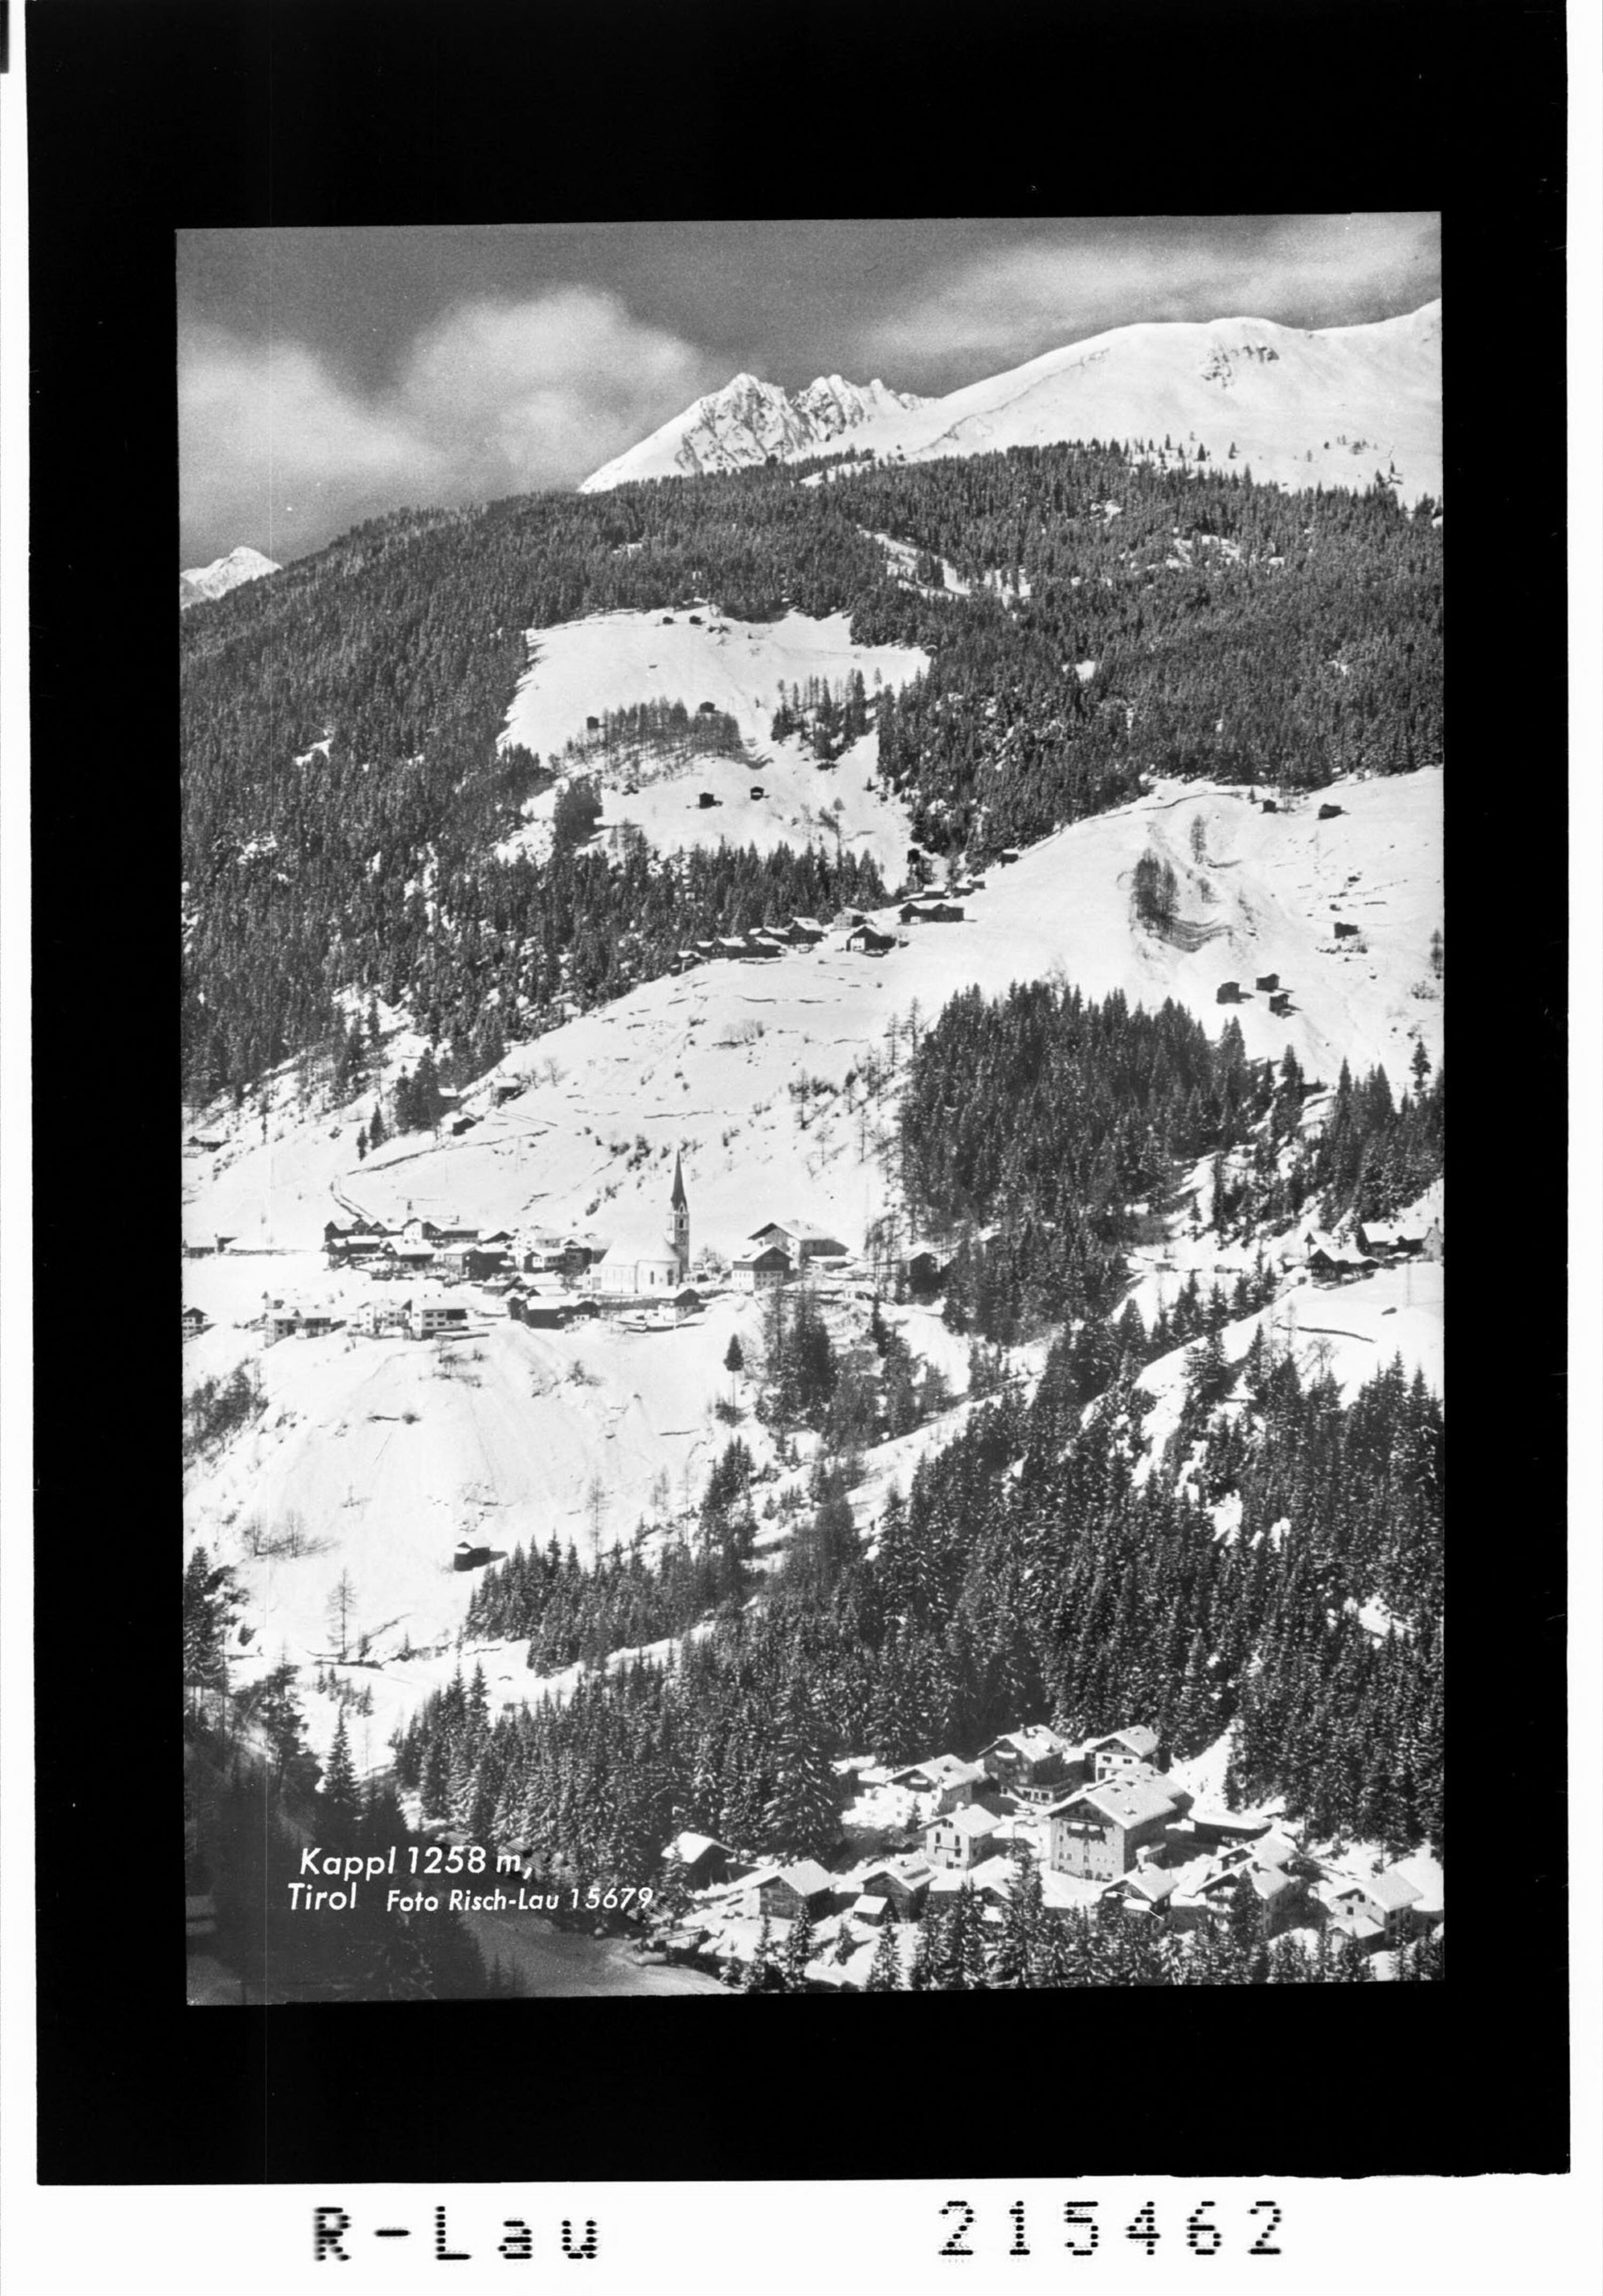 Kappl 1258 m, Tirol></div>


    <hr>
    <div class=